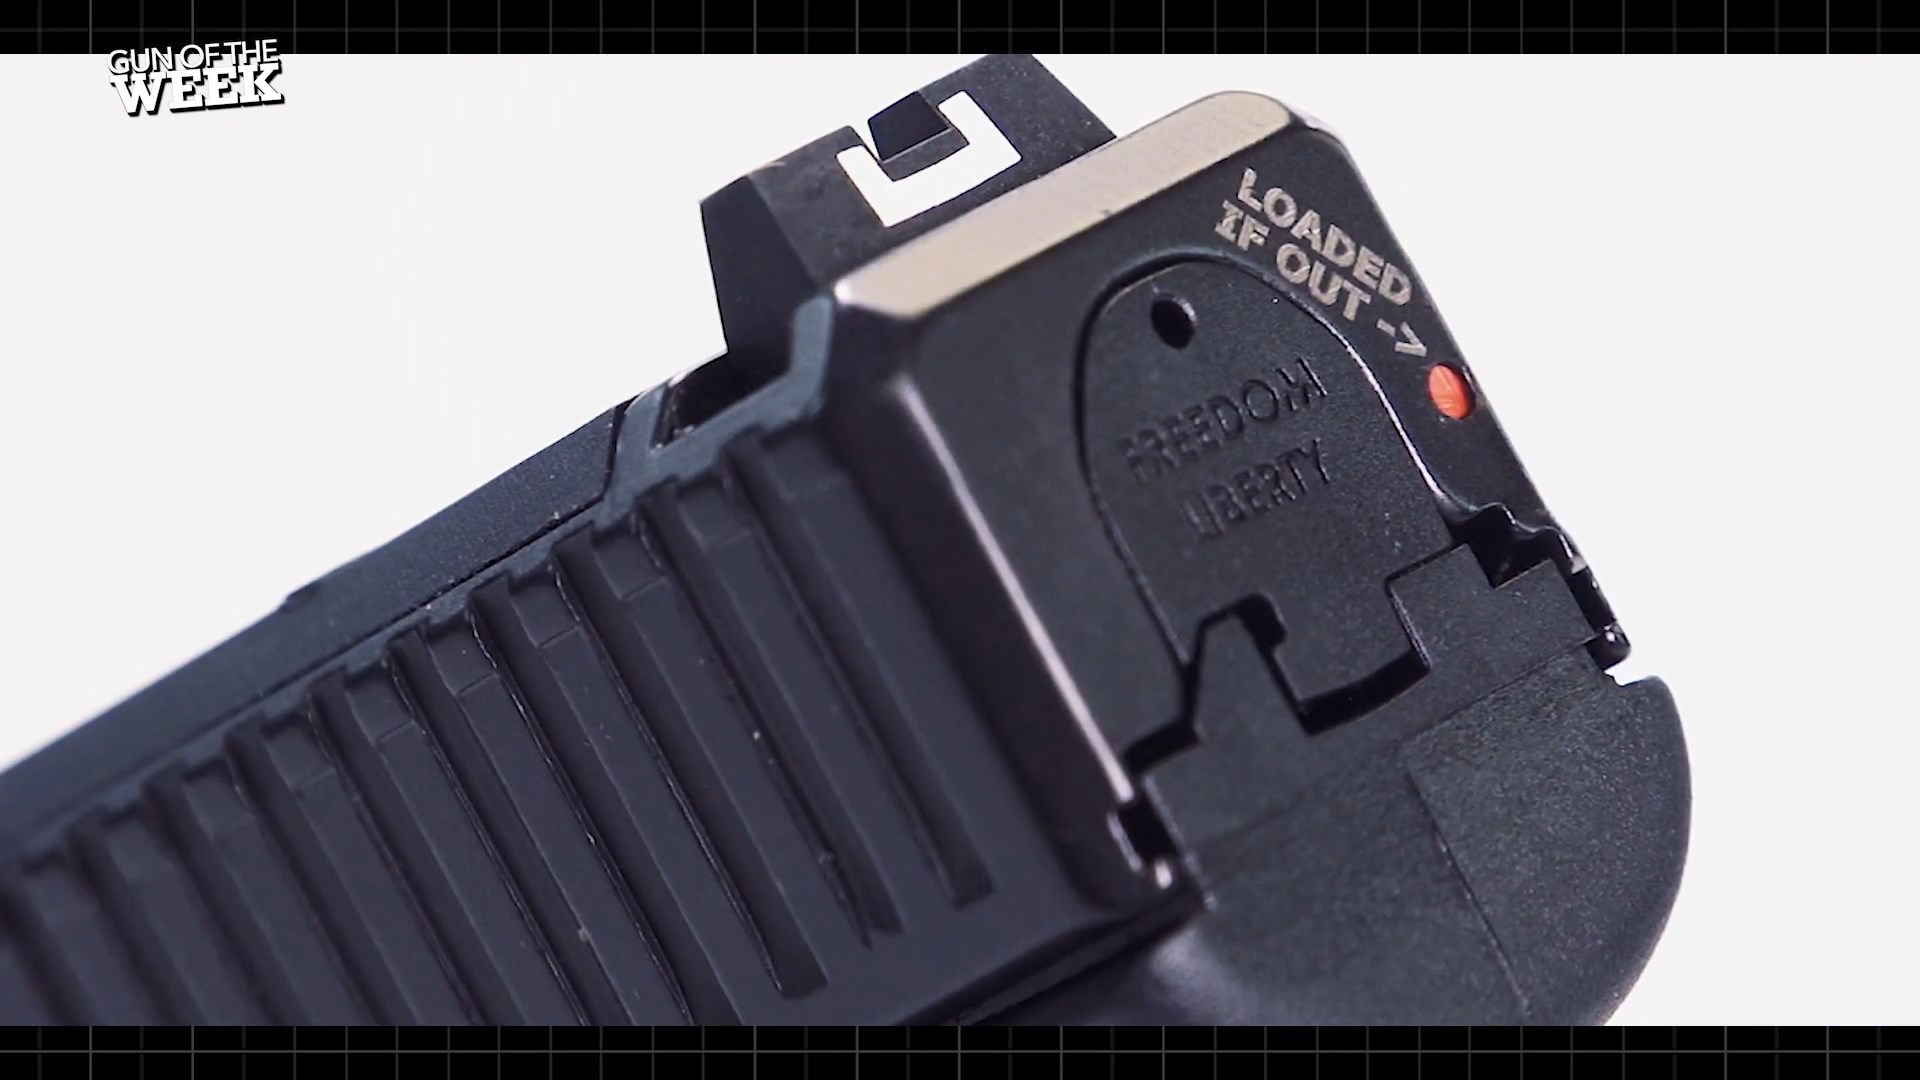 rear view of FMK 9C1-G3 Elite slide marking detail gun pistol